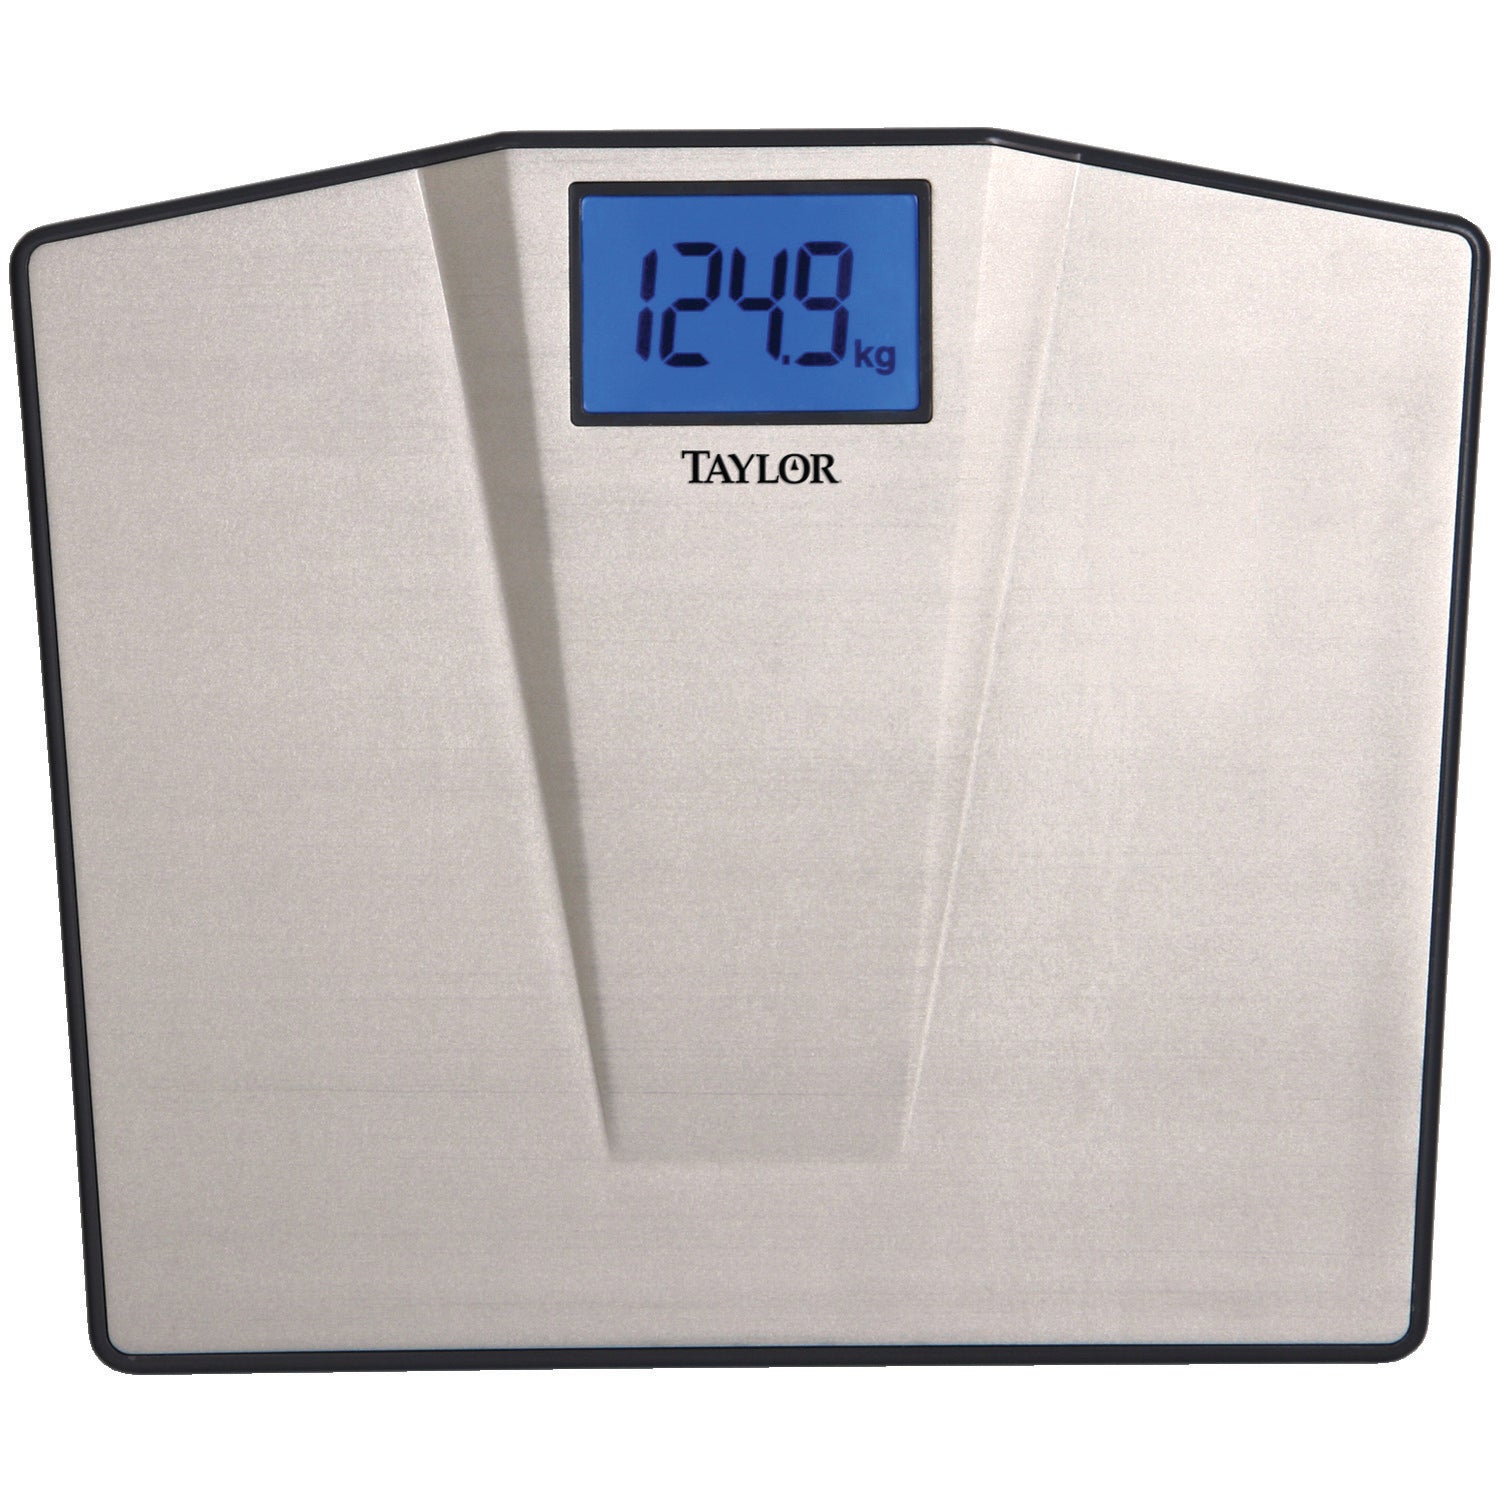 Taylor Precision Products 74104102 Accu-Glo 550-lb Capacity Bathroom Scale